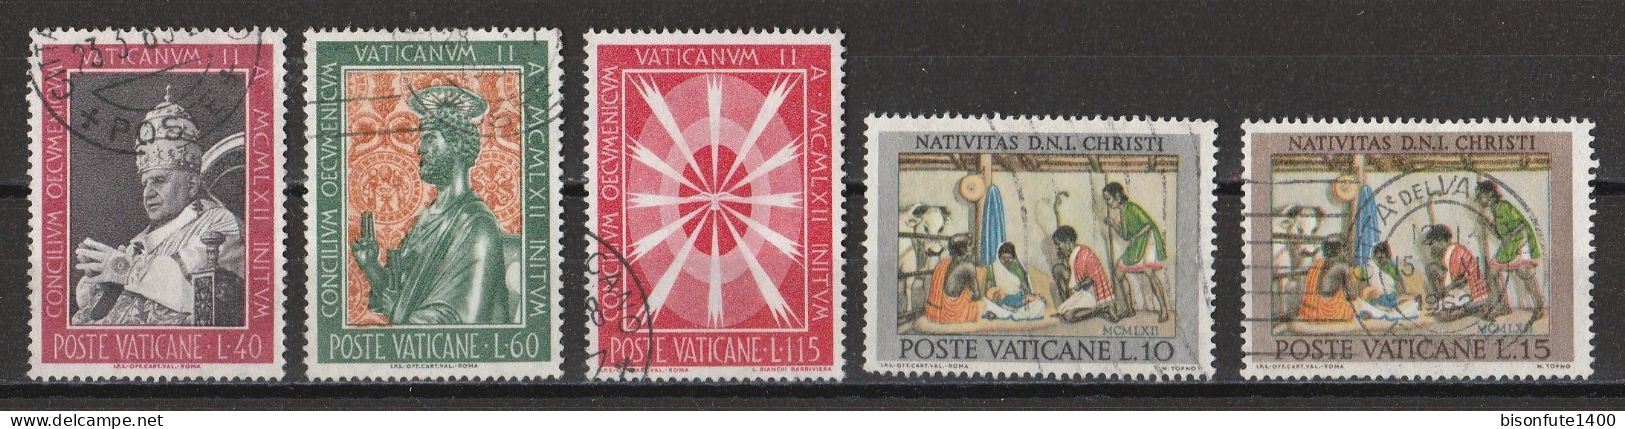 Vatican 1962 : Timbres Yvert & Tellier N° 357 - 358 - 360 - 364 - 366 - 367 - 368 - 369 - 370 - 371 Et 372 Oblitérés. - Gebraucht